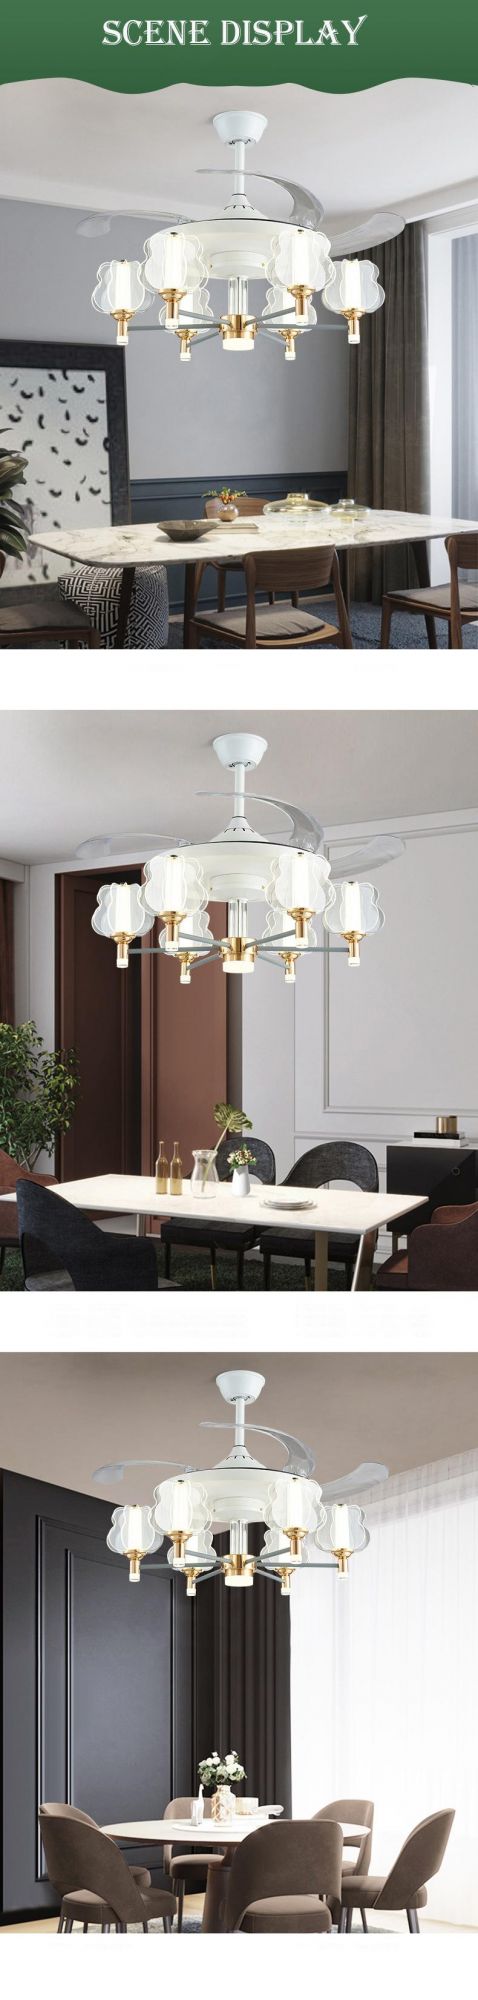 Modern Minimalist Living Room Electric Fan Lamp Bedroom Dining Room